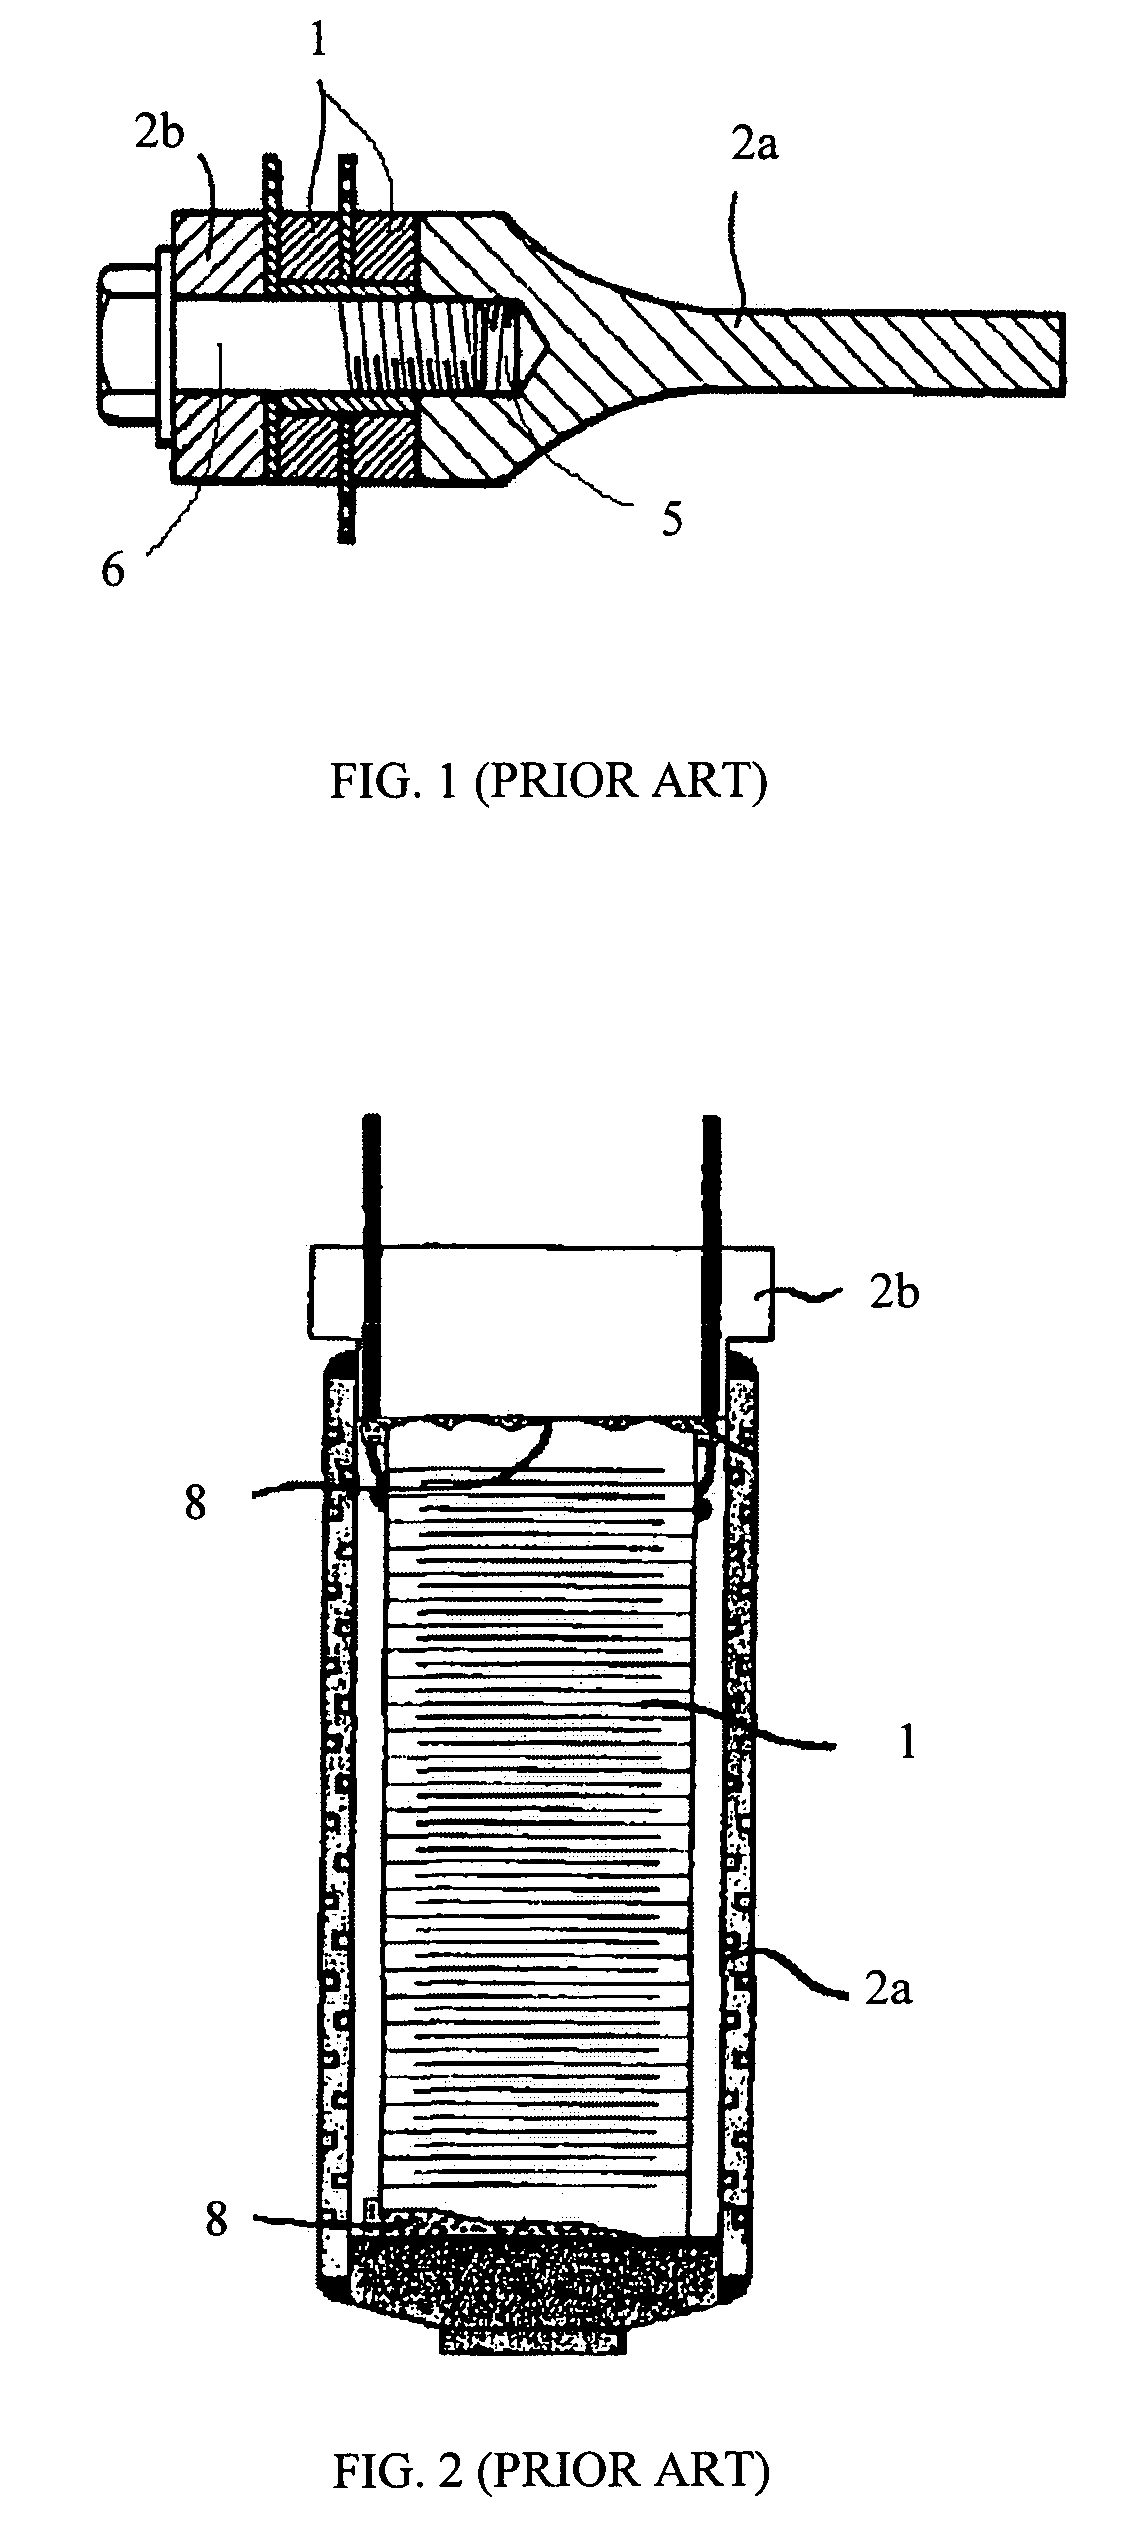 Molded piezoelectric apparatus